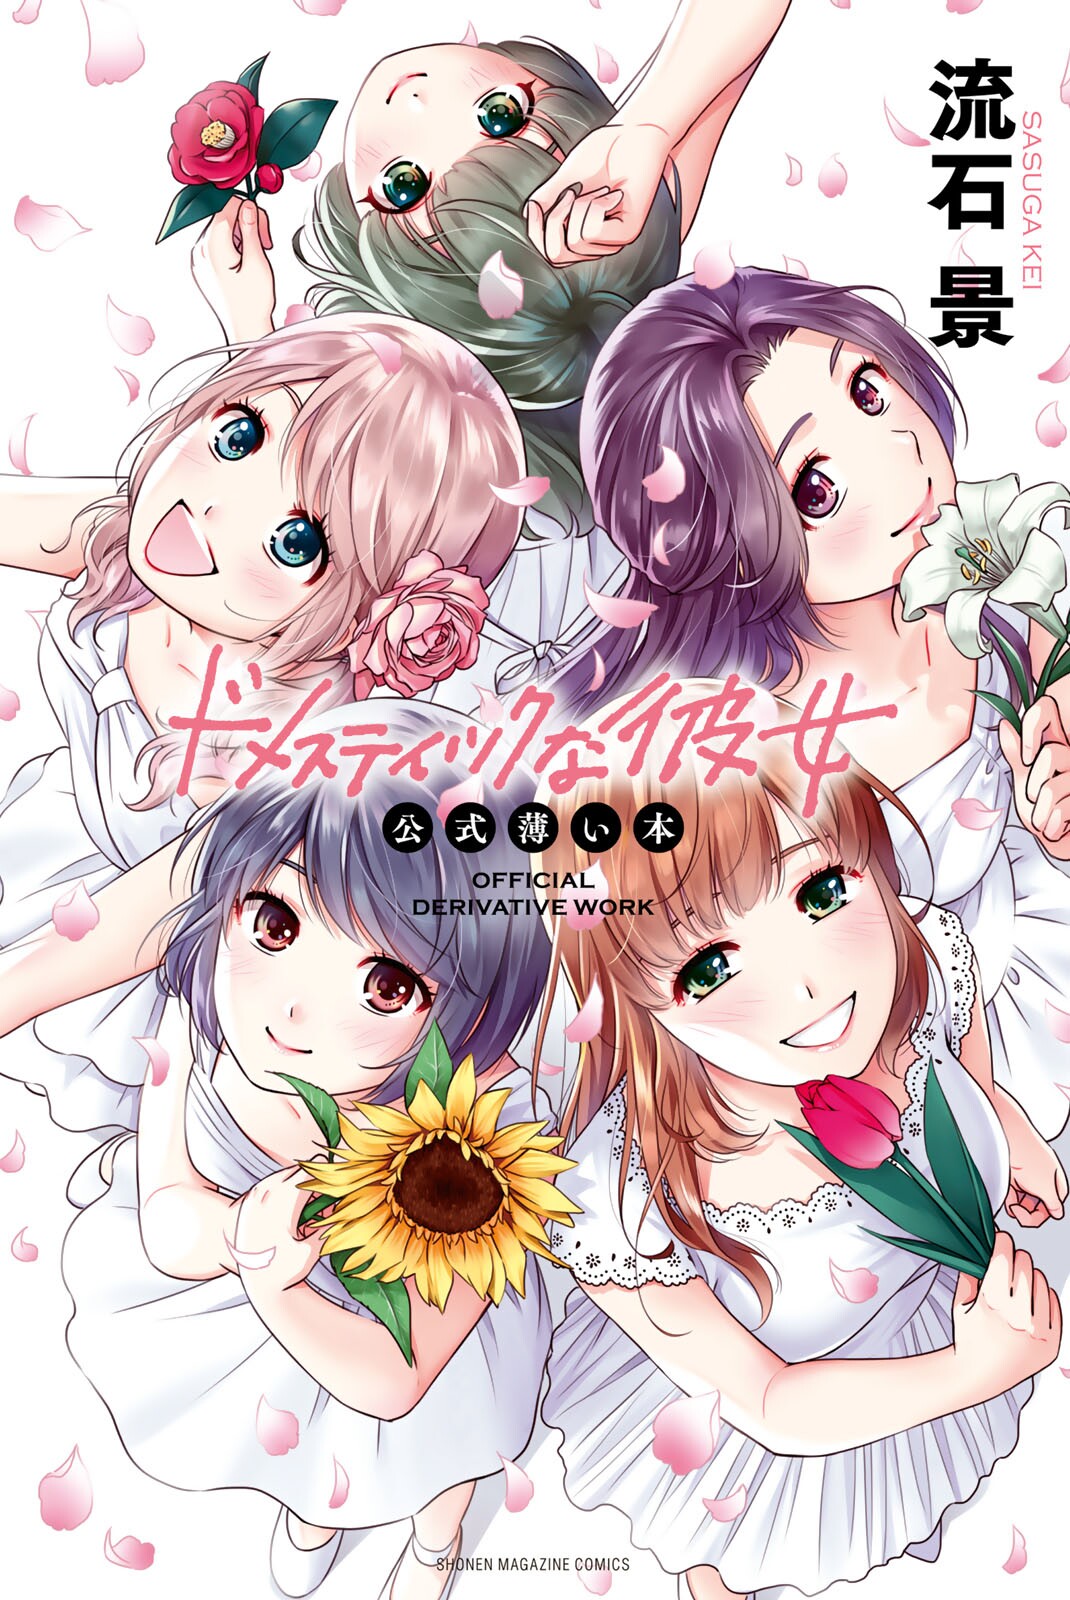 Otaku Network: Domestic Girlfriend - Manga and Anime Overview